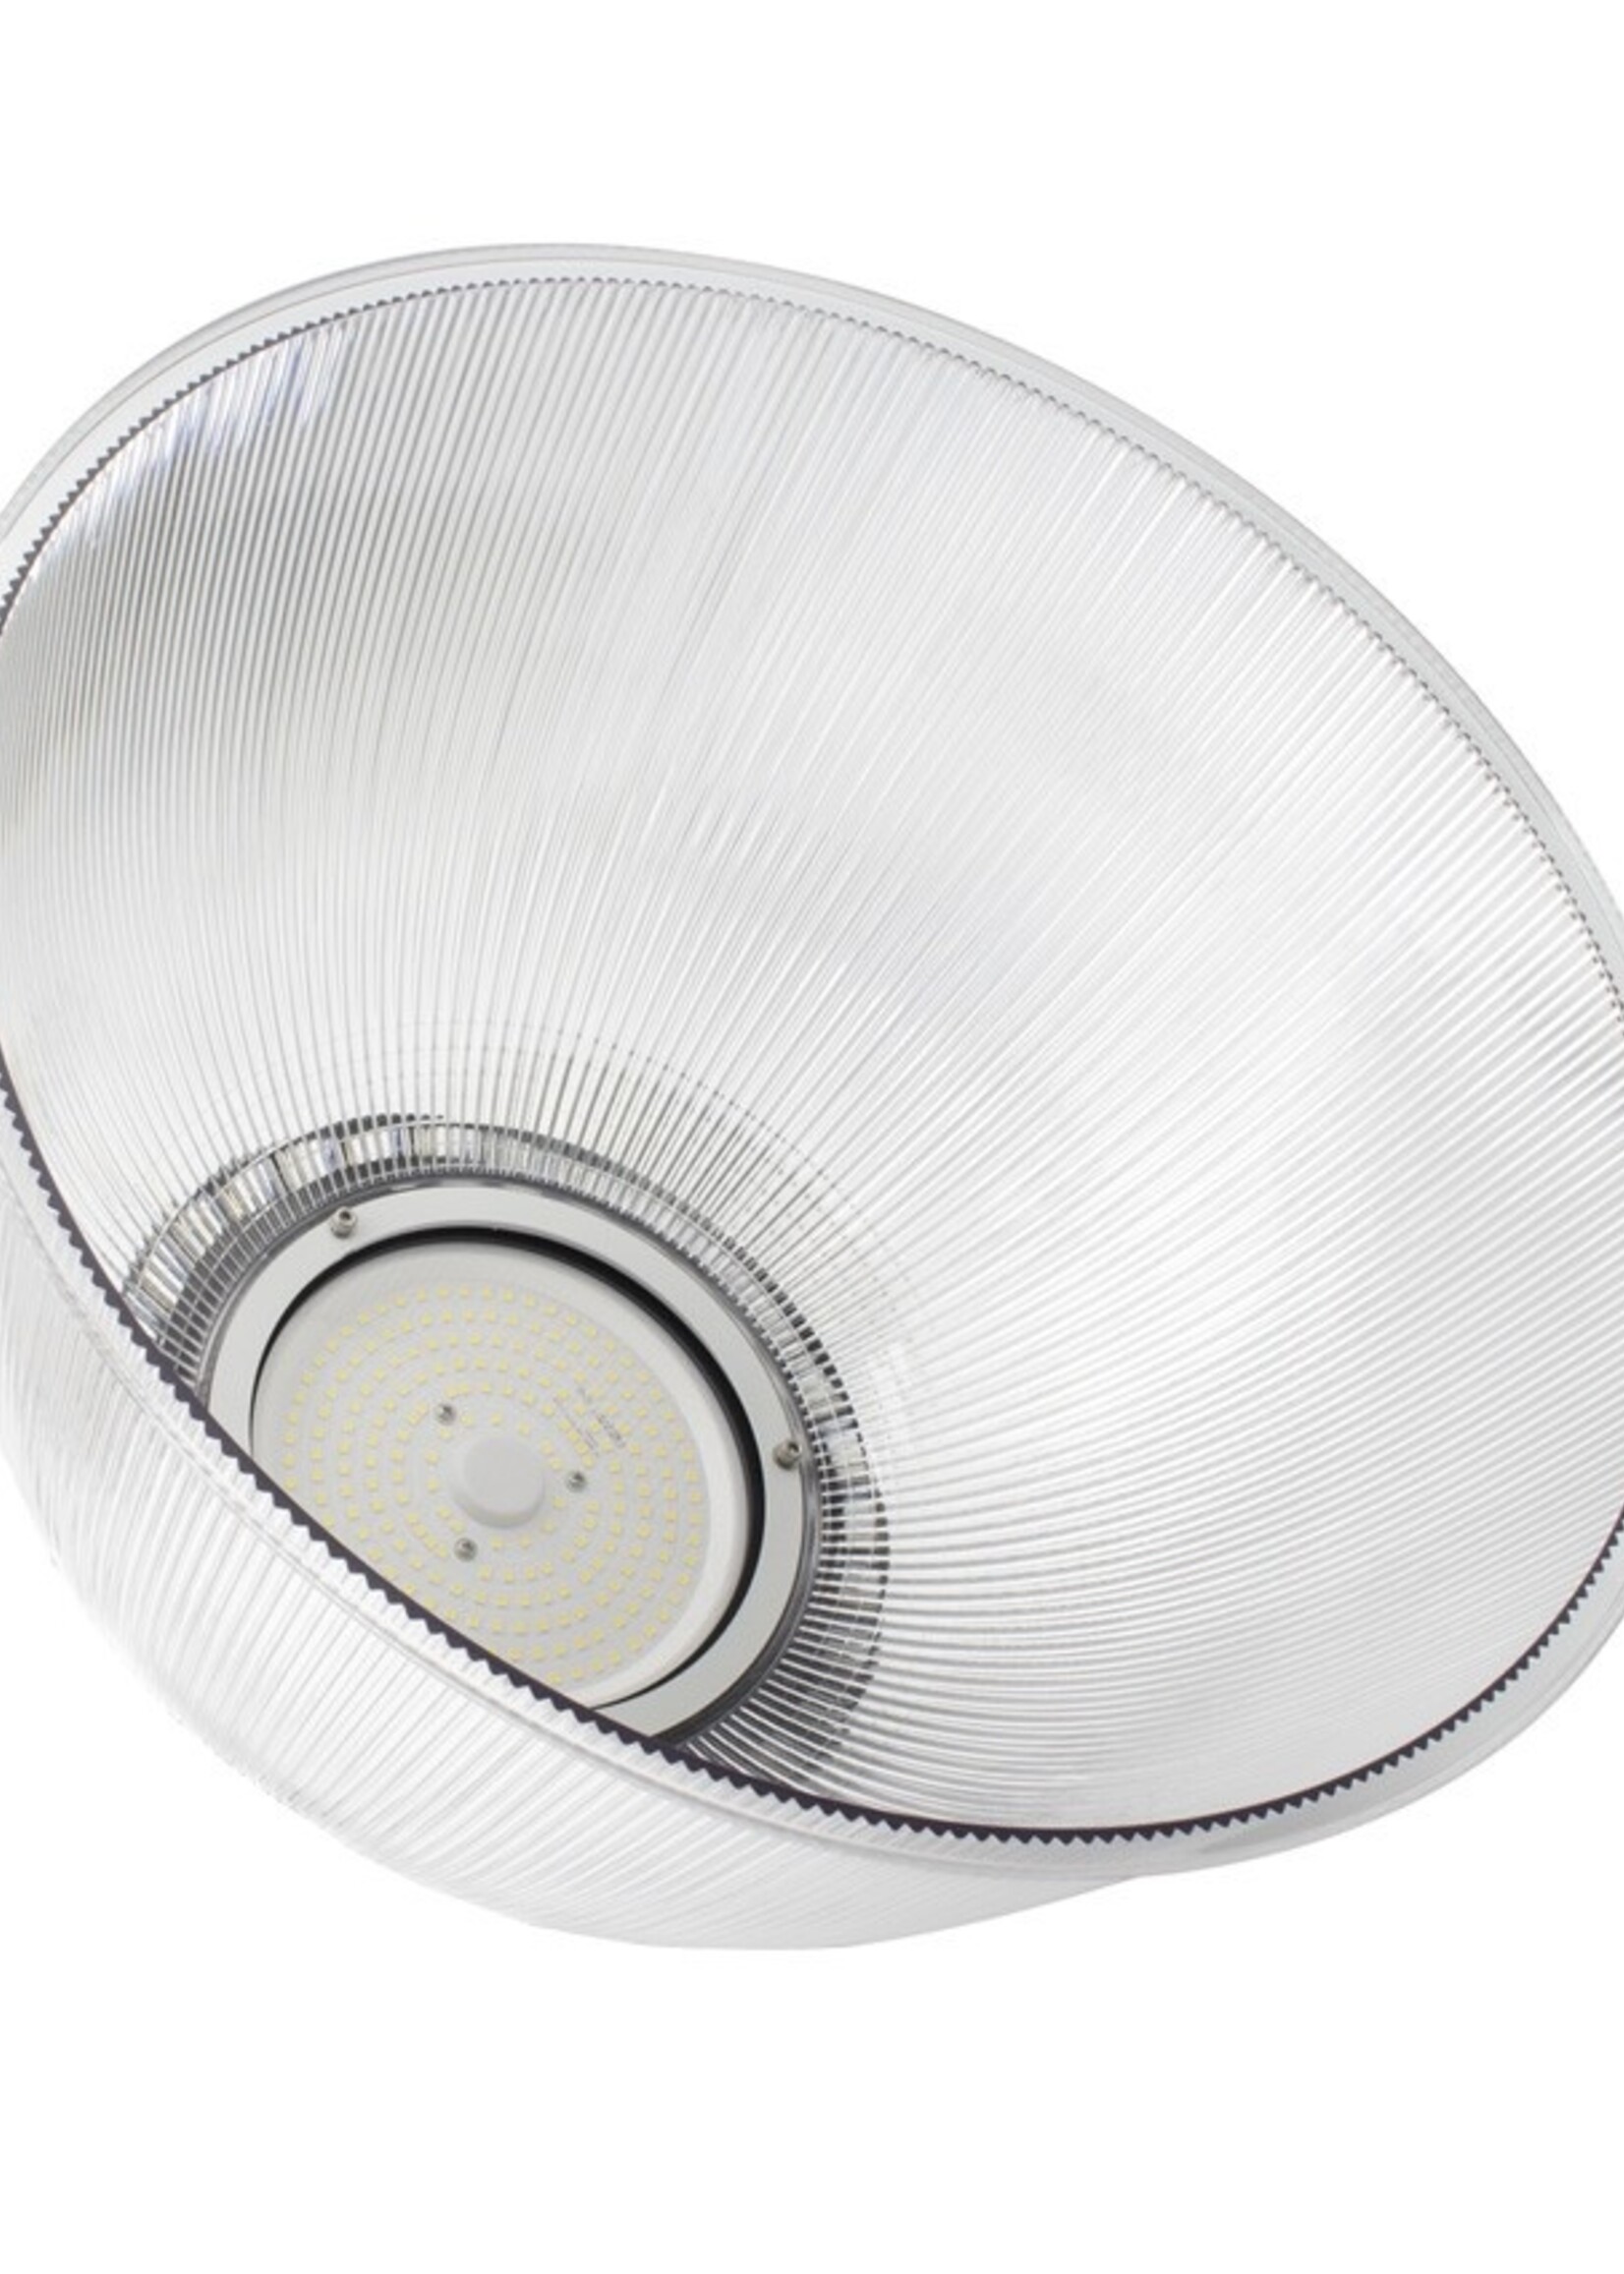 LEDWINKEL-Online LED UFO Highbay reflector hood for 240W 410x215mm